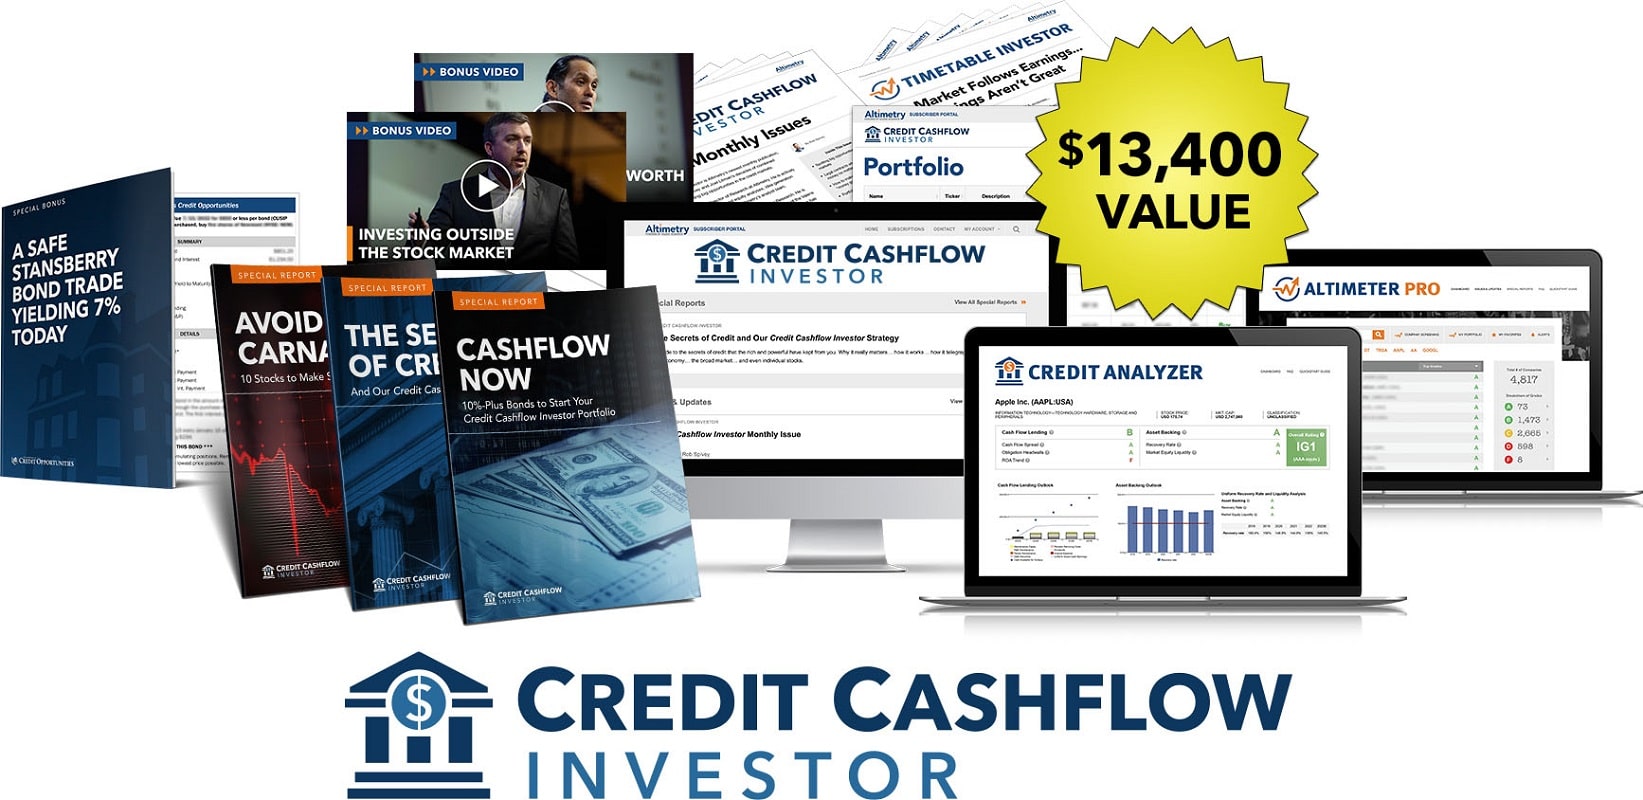 Credit Cashflow Investor Review